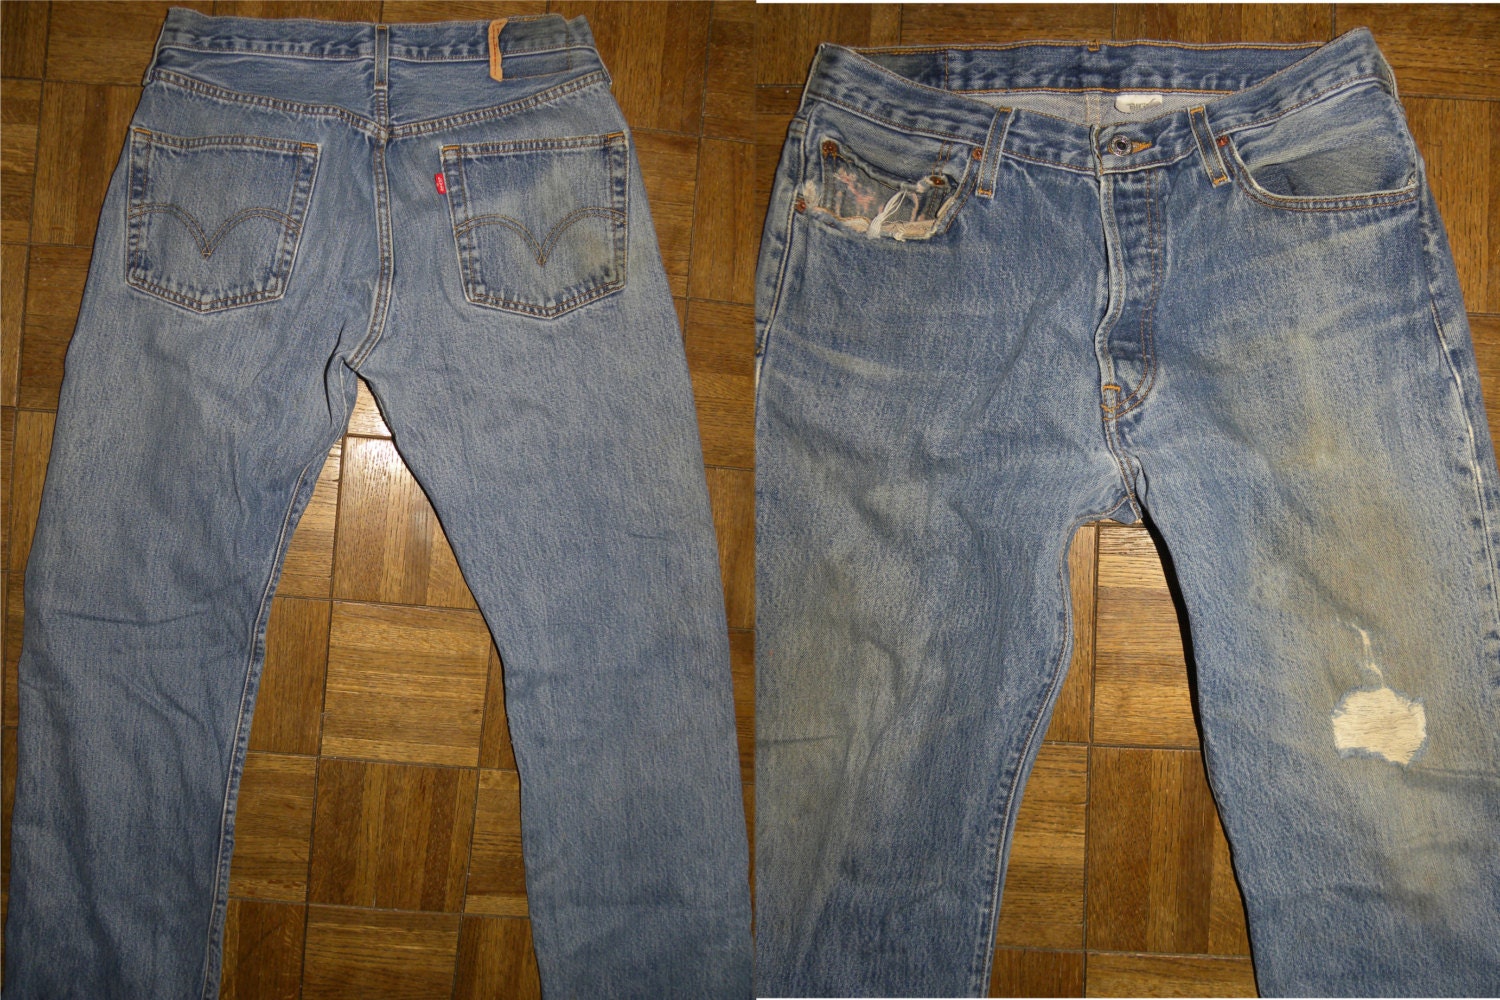 Levi's 501 Jeans / Destroyed / Distressed / Levis